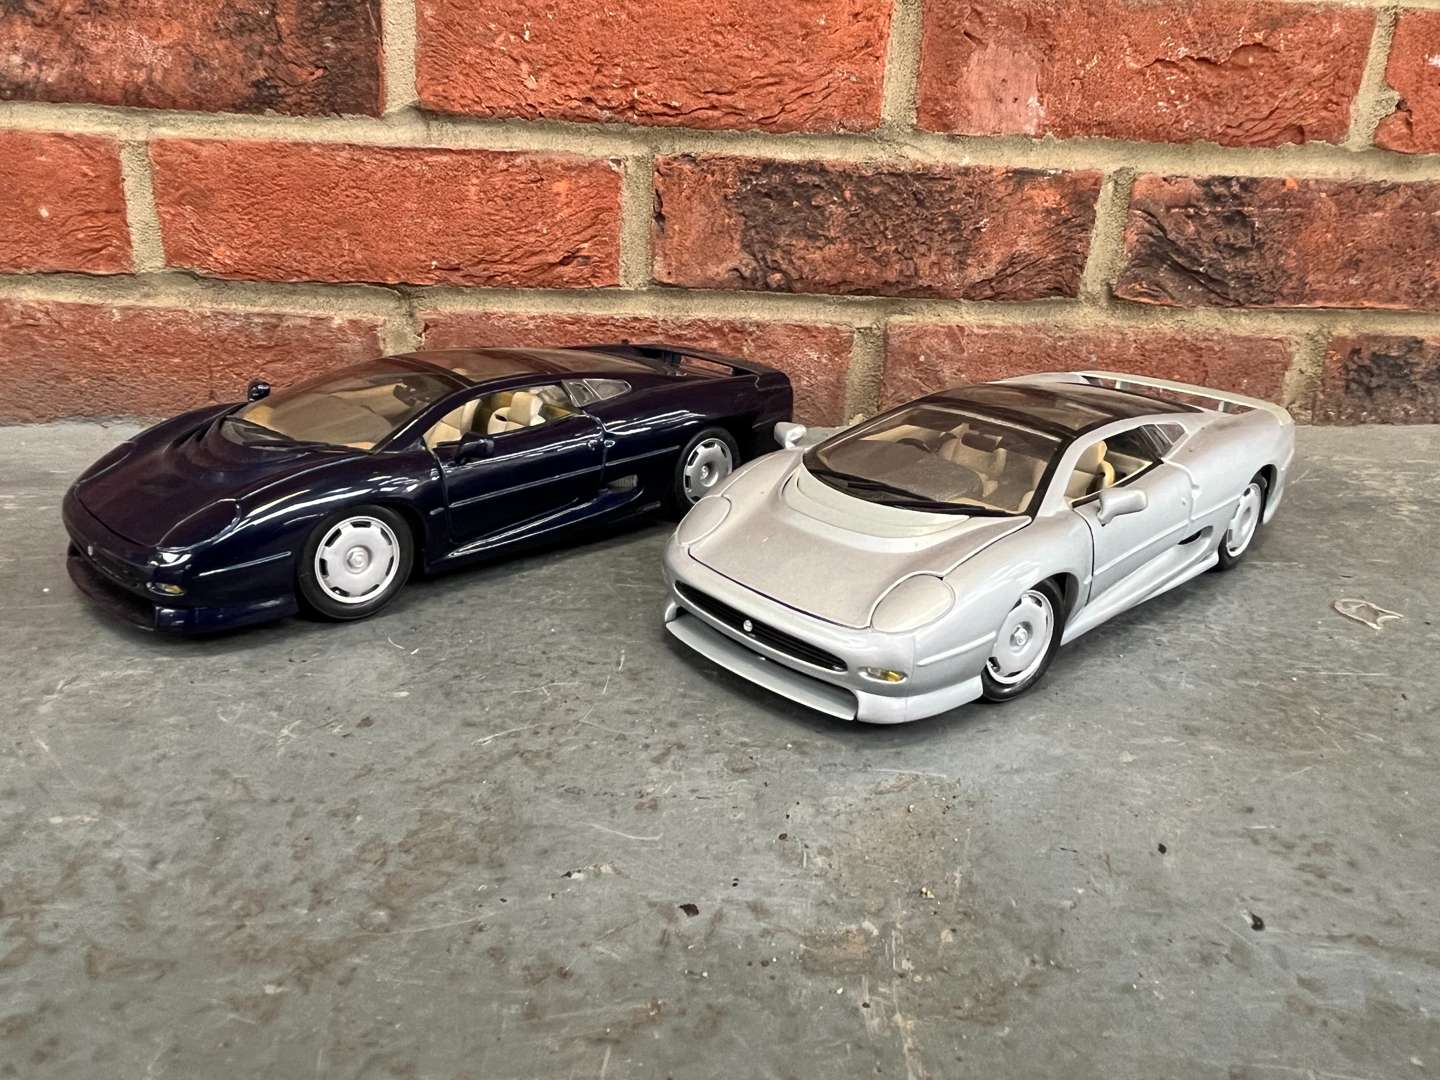 <p>Two Jaguar XJ220 Model Cars By Maisto</p>